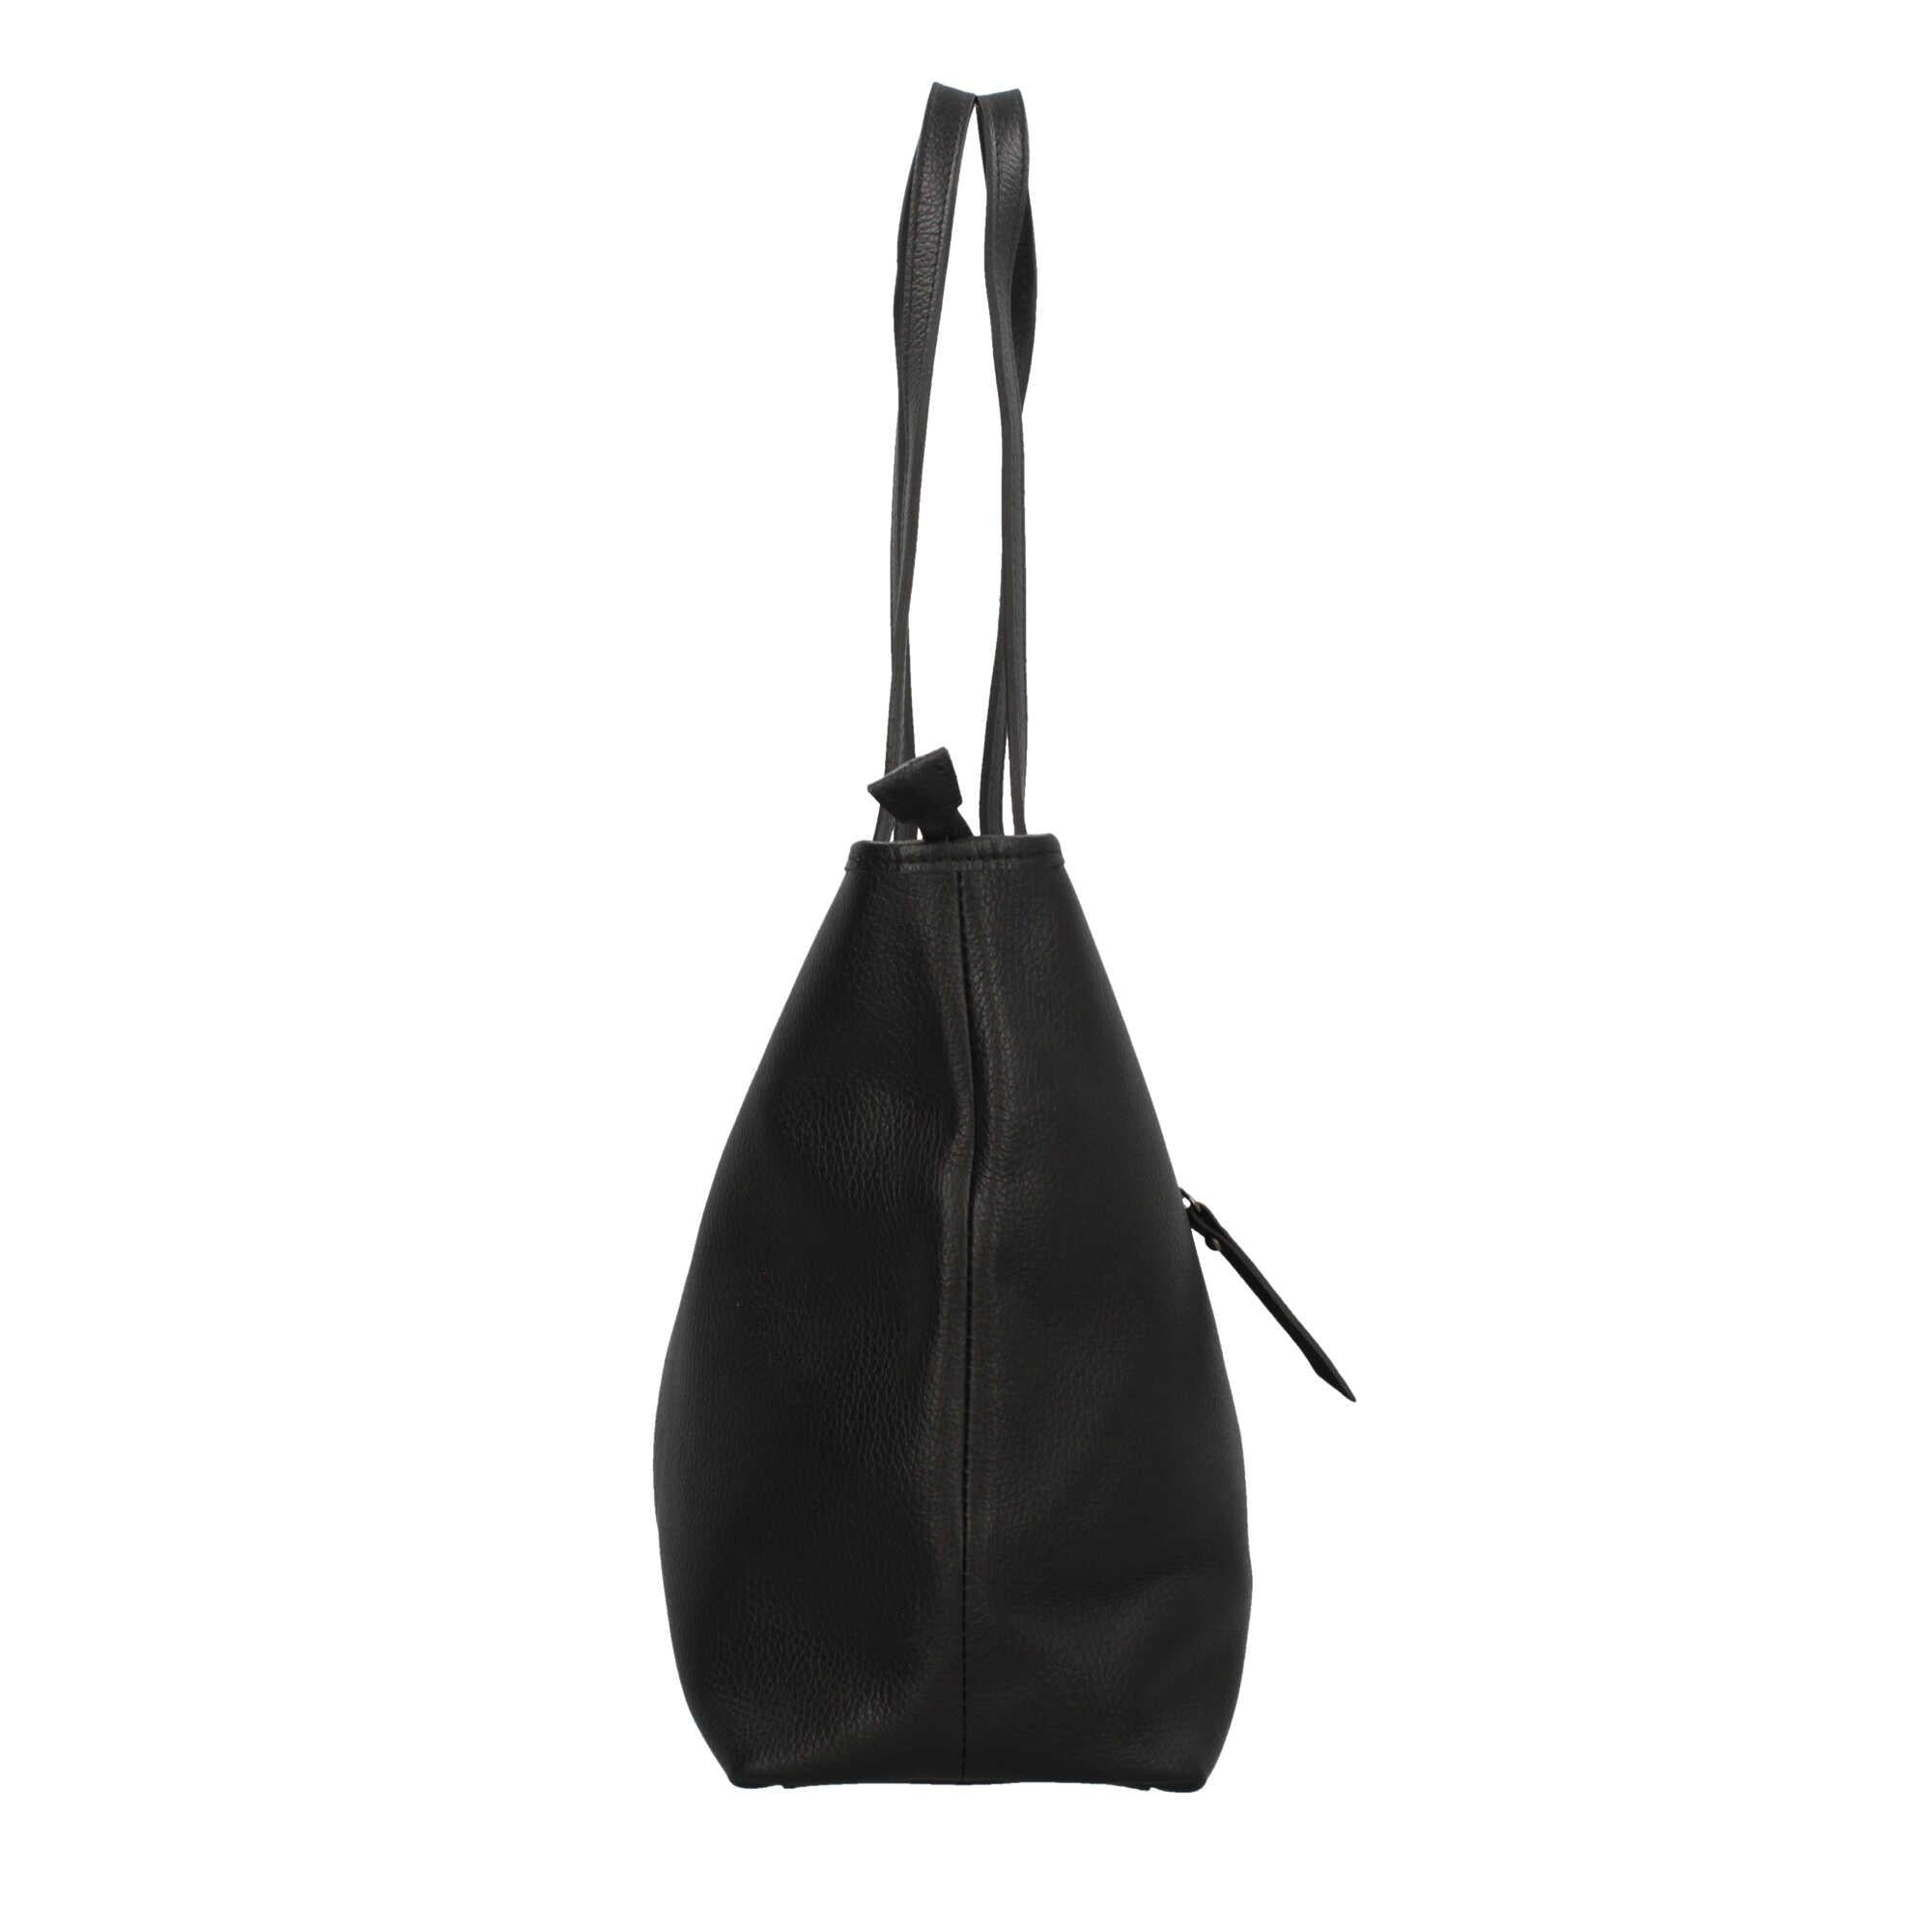 shopping bag con manici nlunghi e chiusura zip Made in italy in vera pelle